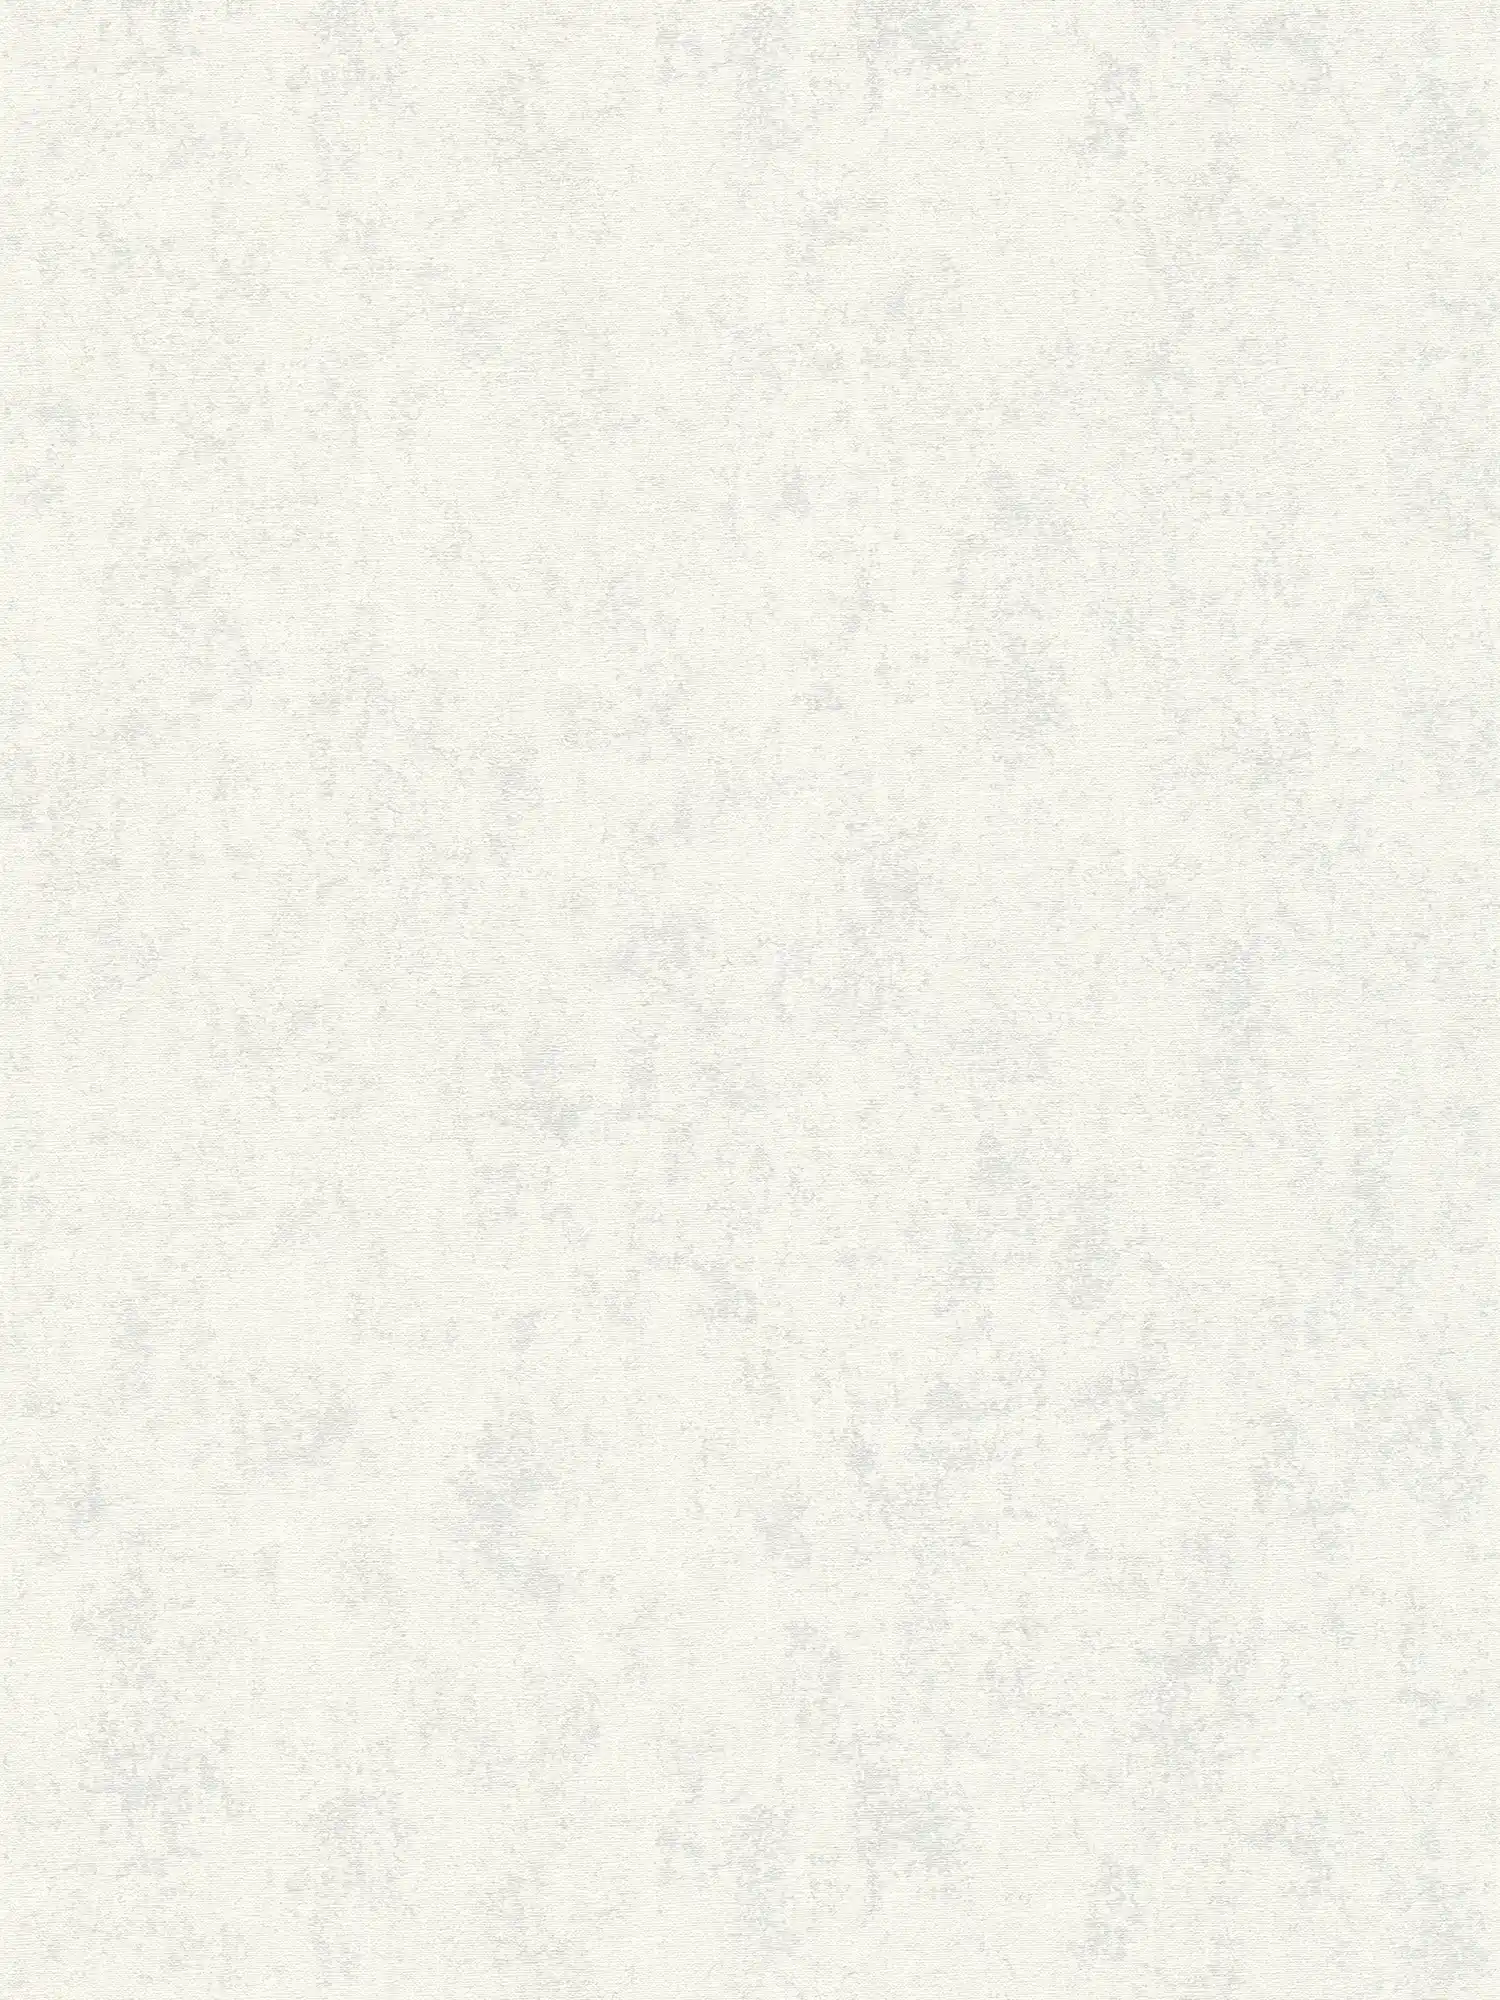 Papel pintado de estilo escandinavo con diseño de textura lisa - gris, blanco
